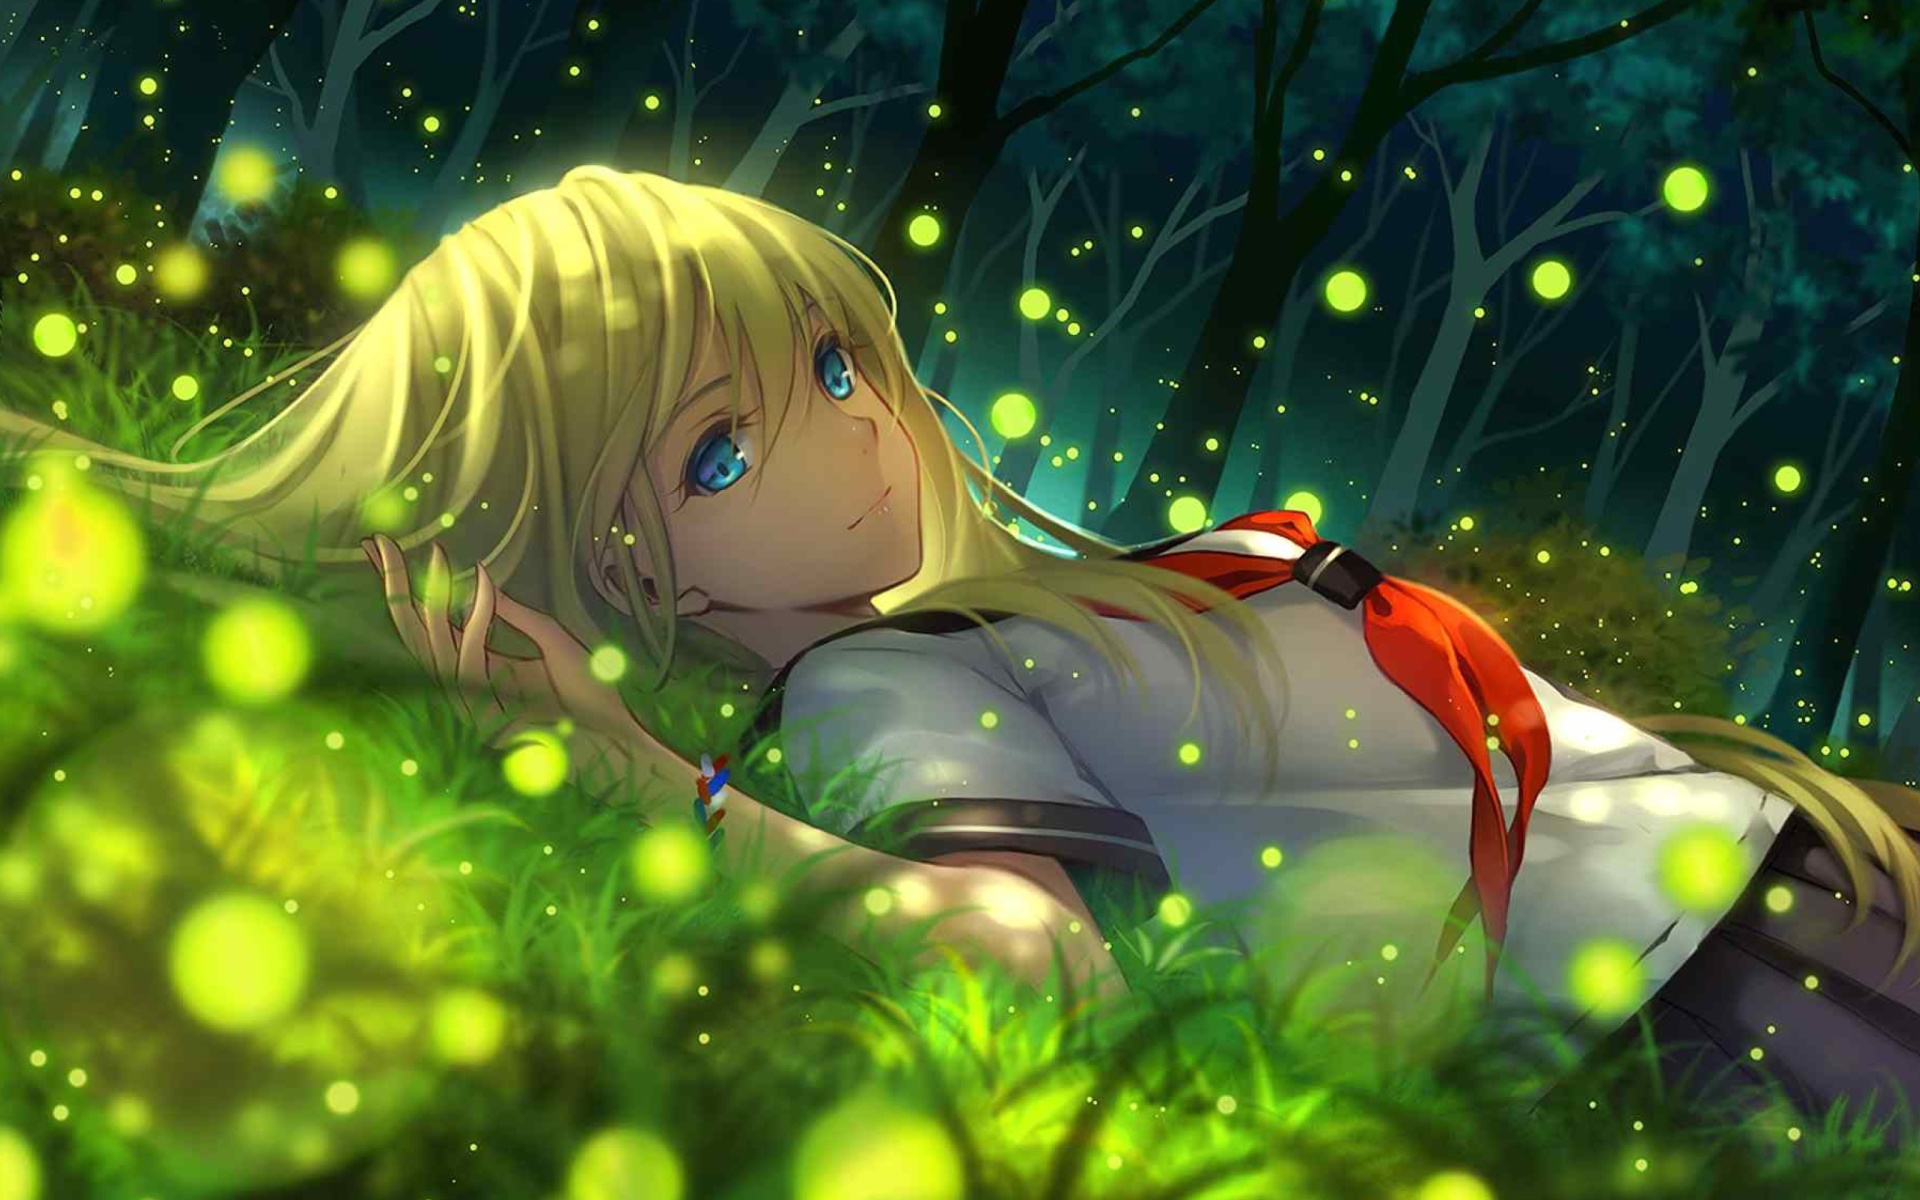 Everlasting Summer Anime - Fondos de pantalla gratis para ...